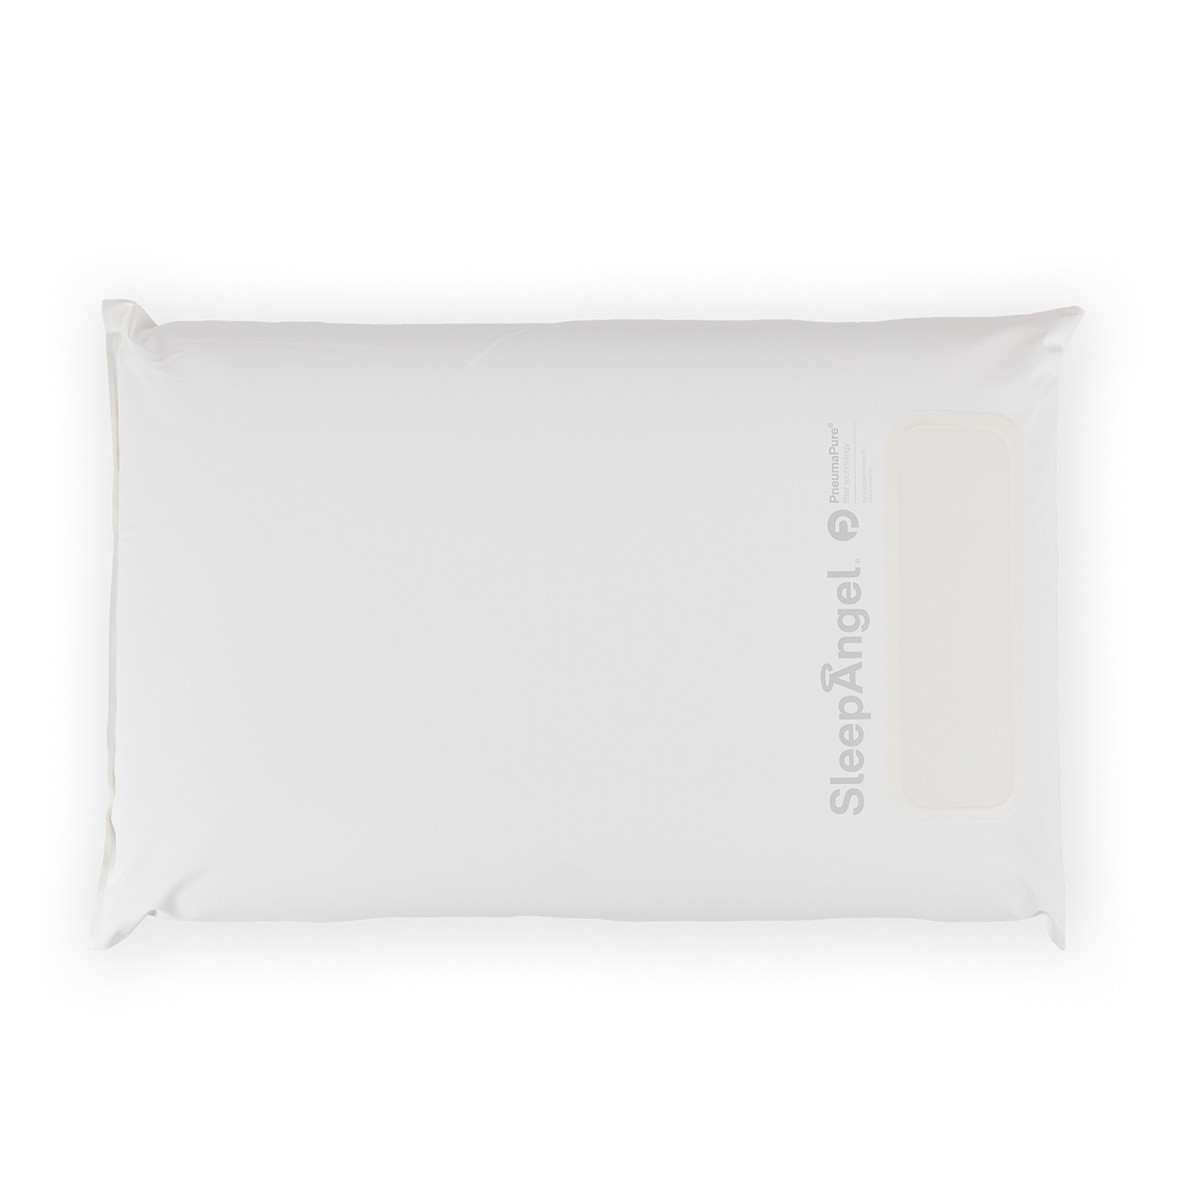 SleepAngel Home Beddings & Hotel Pillow Range